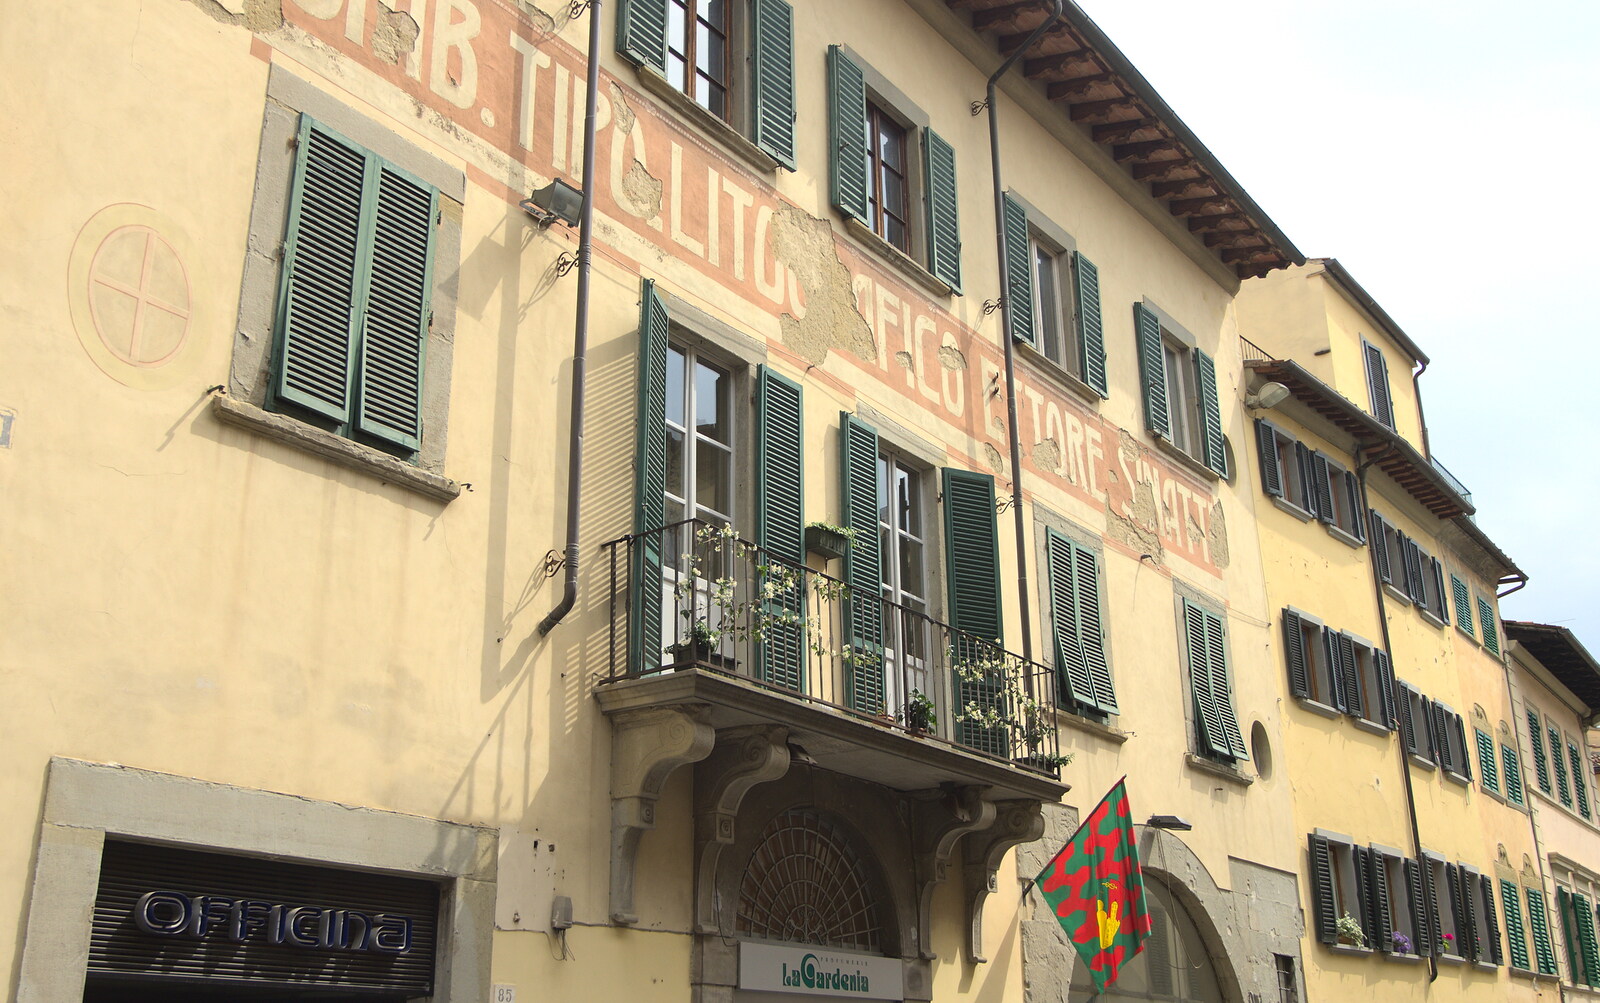 Marconi, Arezzo and the Sagra del Maccherone Festival, Battifolle, Tuscany - 9th June 2013: Crumbling sign on a building